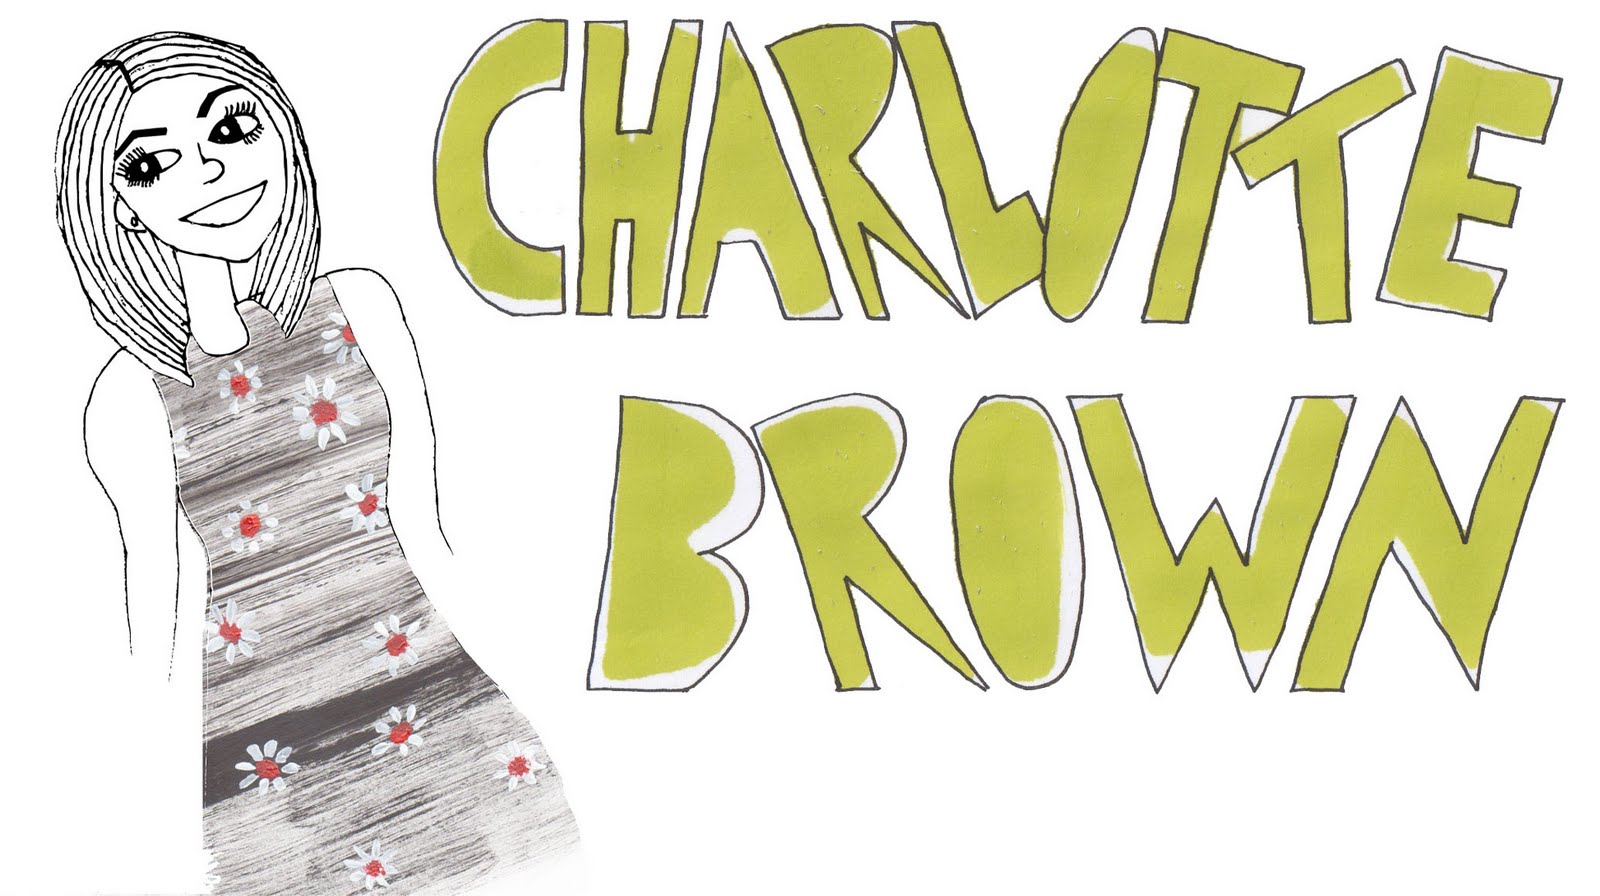 Charlotte Brown